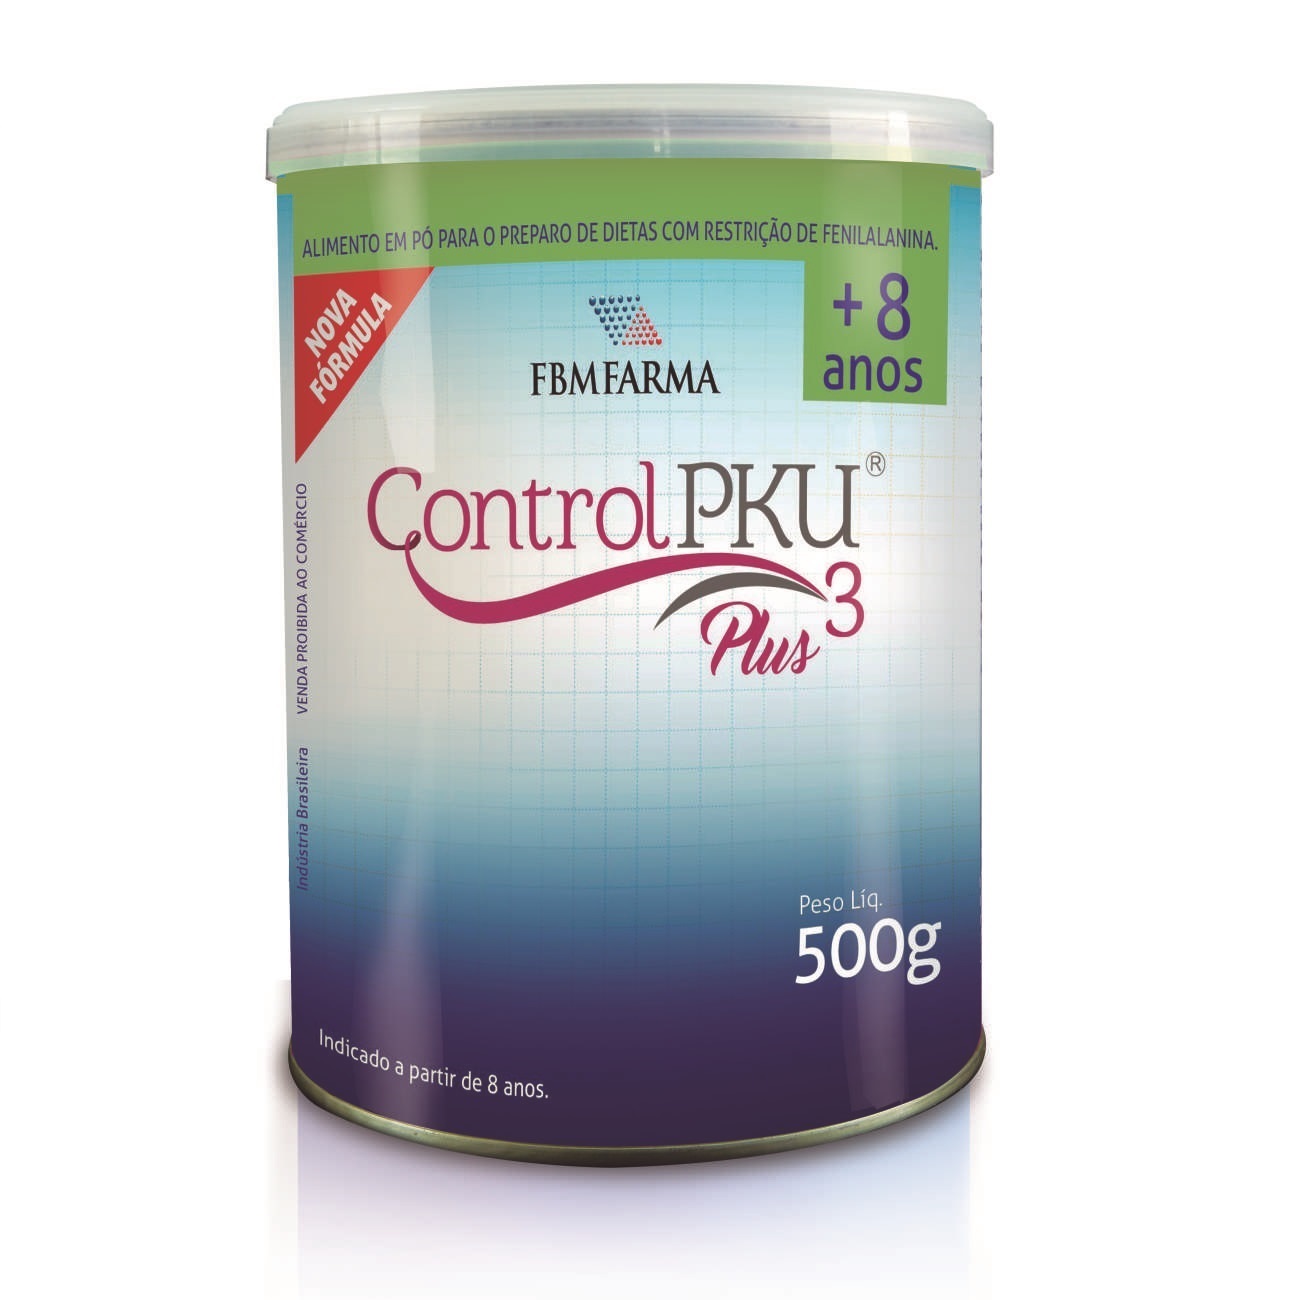 Control PKU 3 Plus